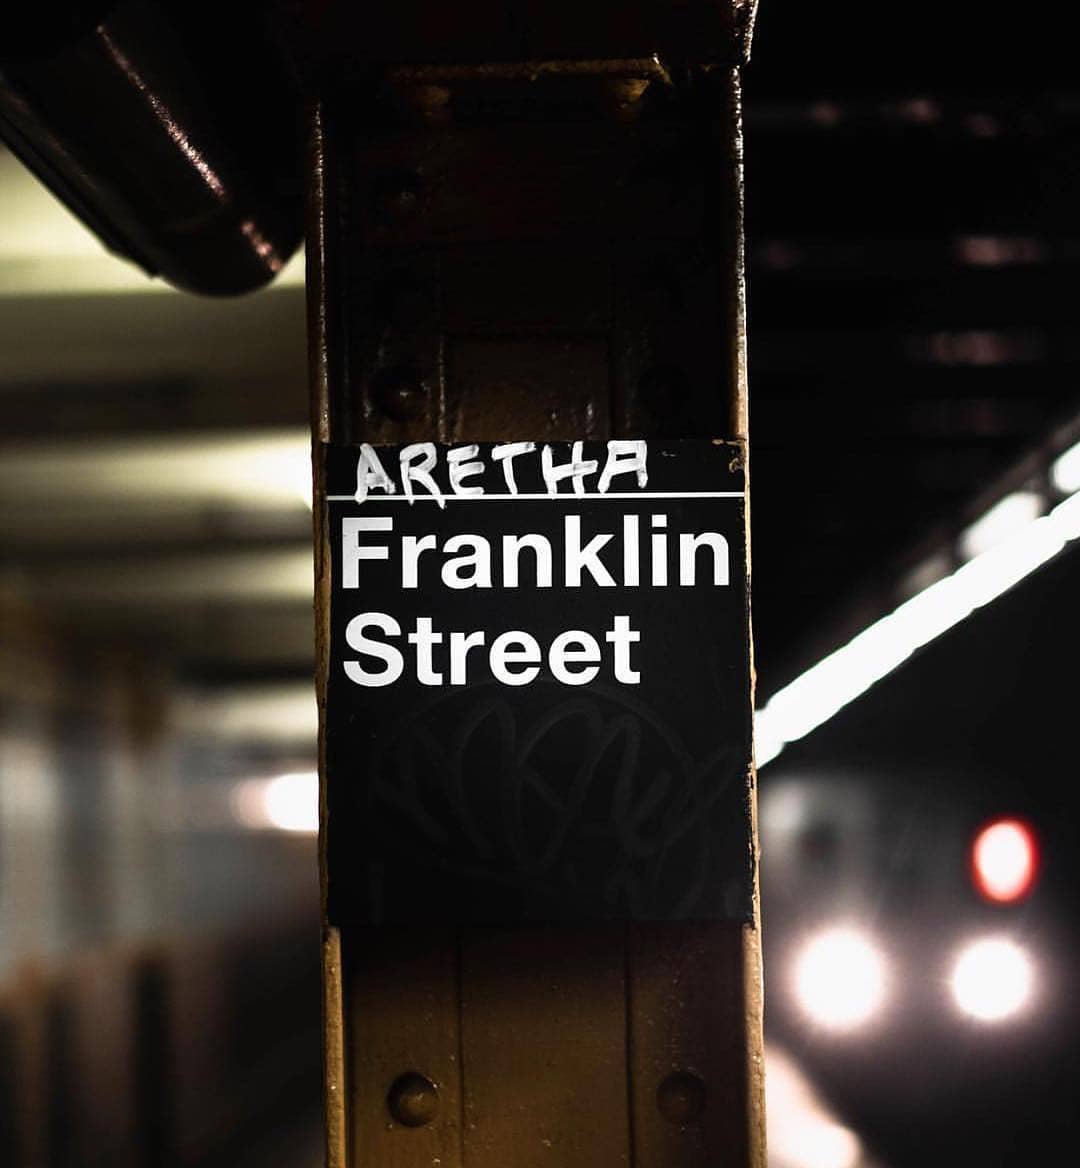 Happy Birthday to a legend - Aretha Franklin 

Respect 